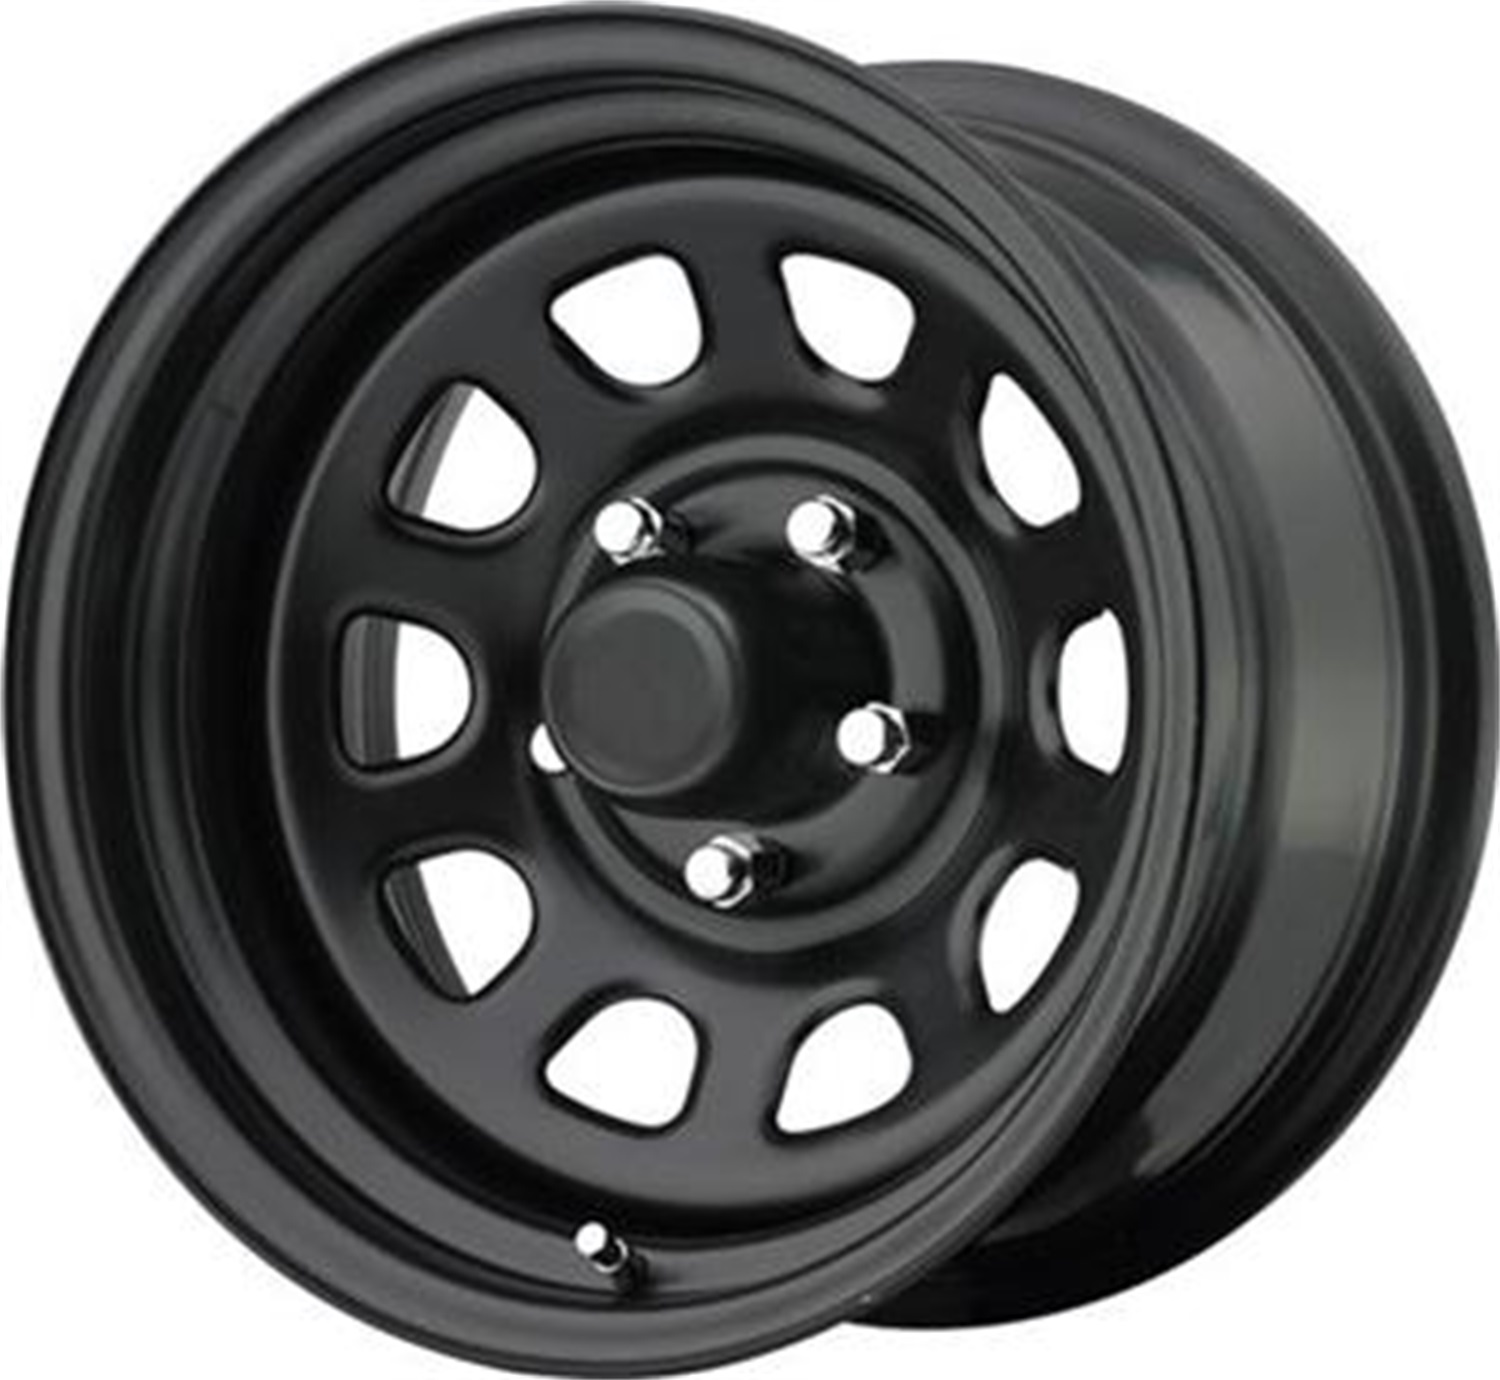 Pro Comp Wheels Pro Comp Wheels 51-5883F Rock Crawler Series 51 Black Wheel